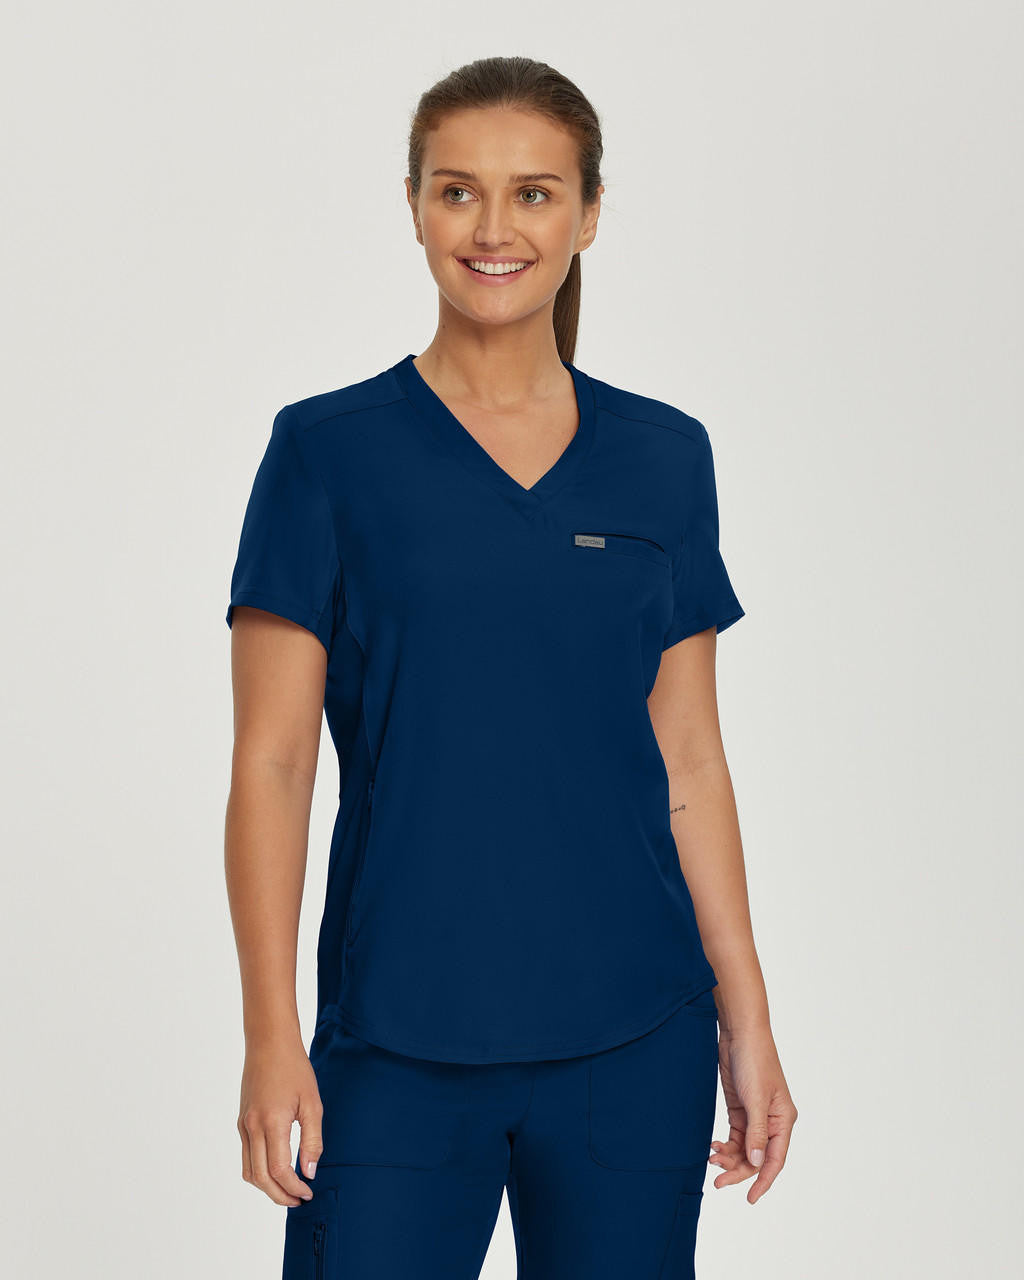 women's medical uniform tops, fashionable nurses uniforms, Women's Landau Forward 2-Pocket V-Neck Scrub Top